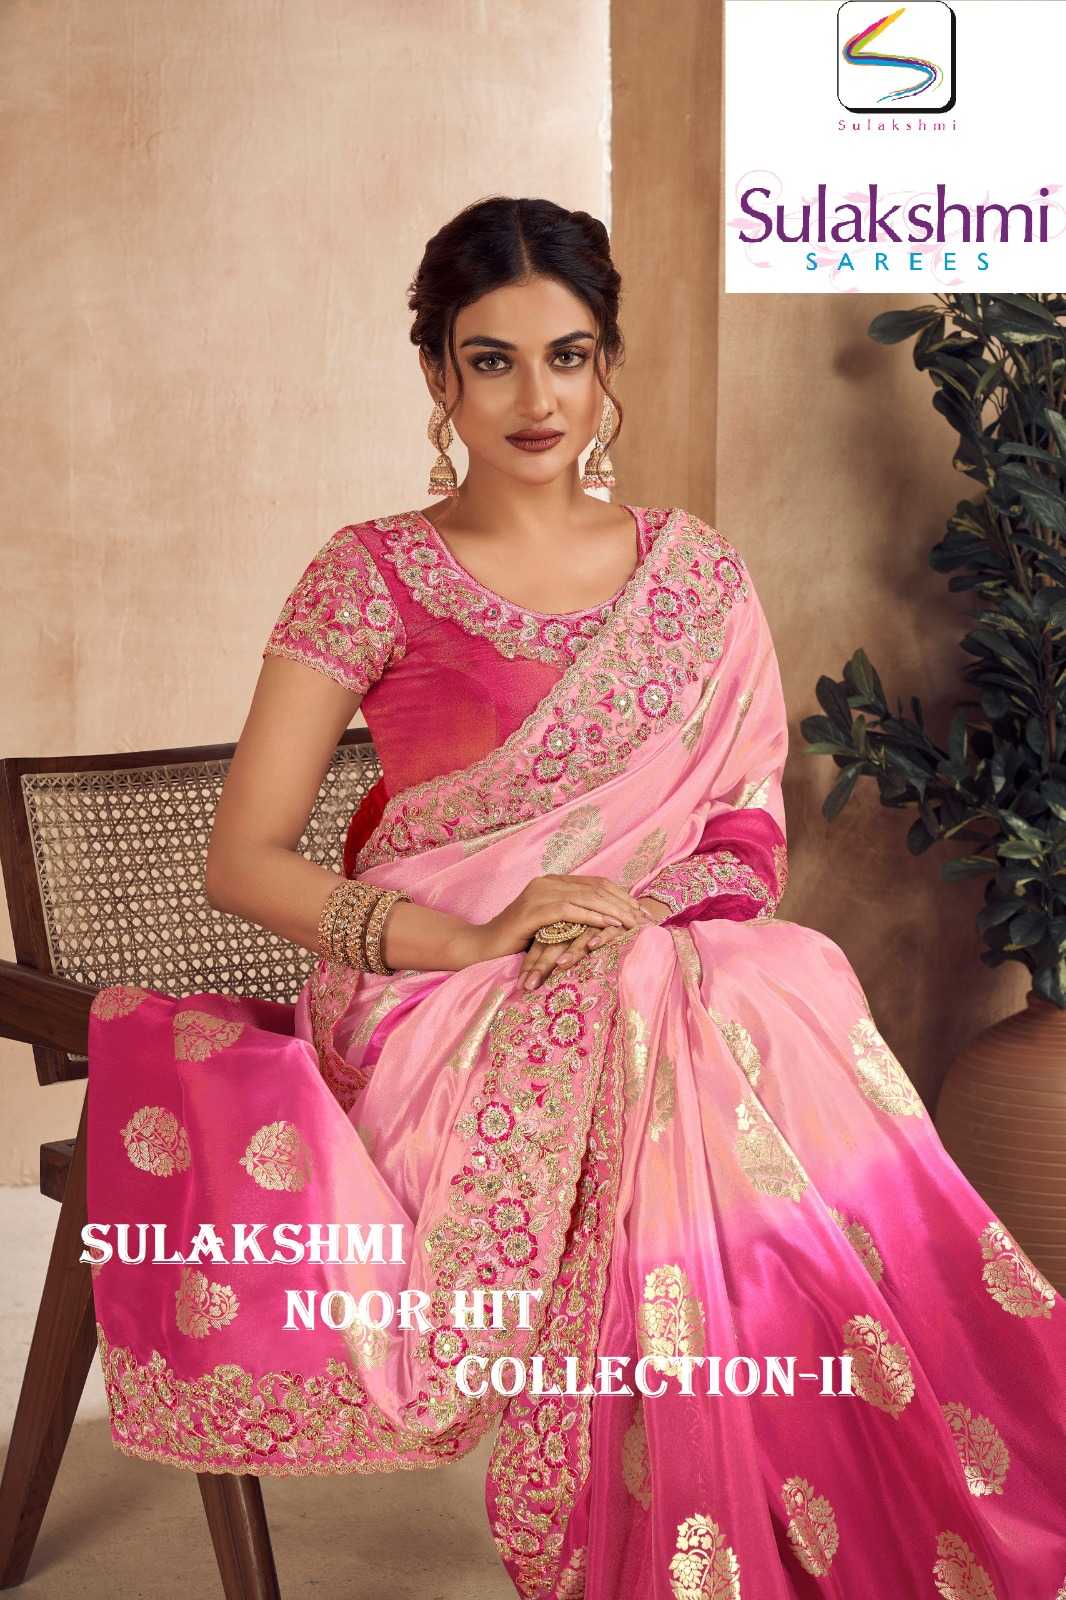 sulakshmi noor hit 2 designer embroidery work wedding wear saree collection